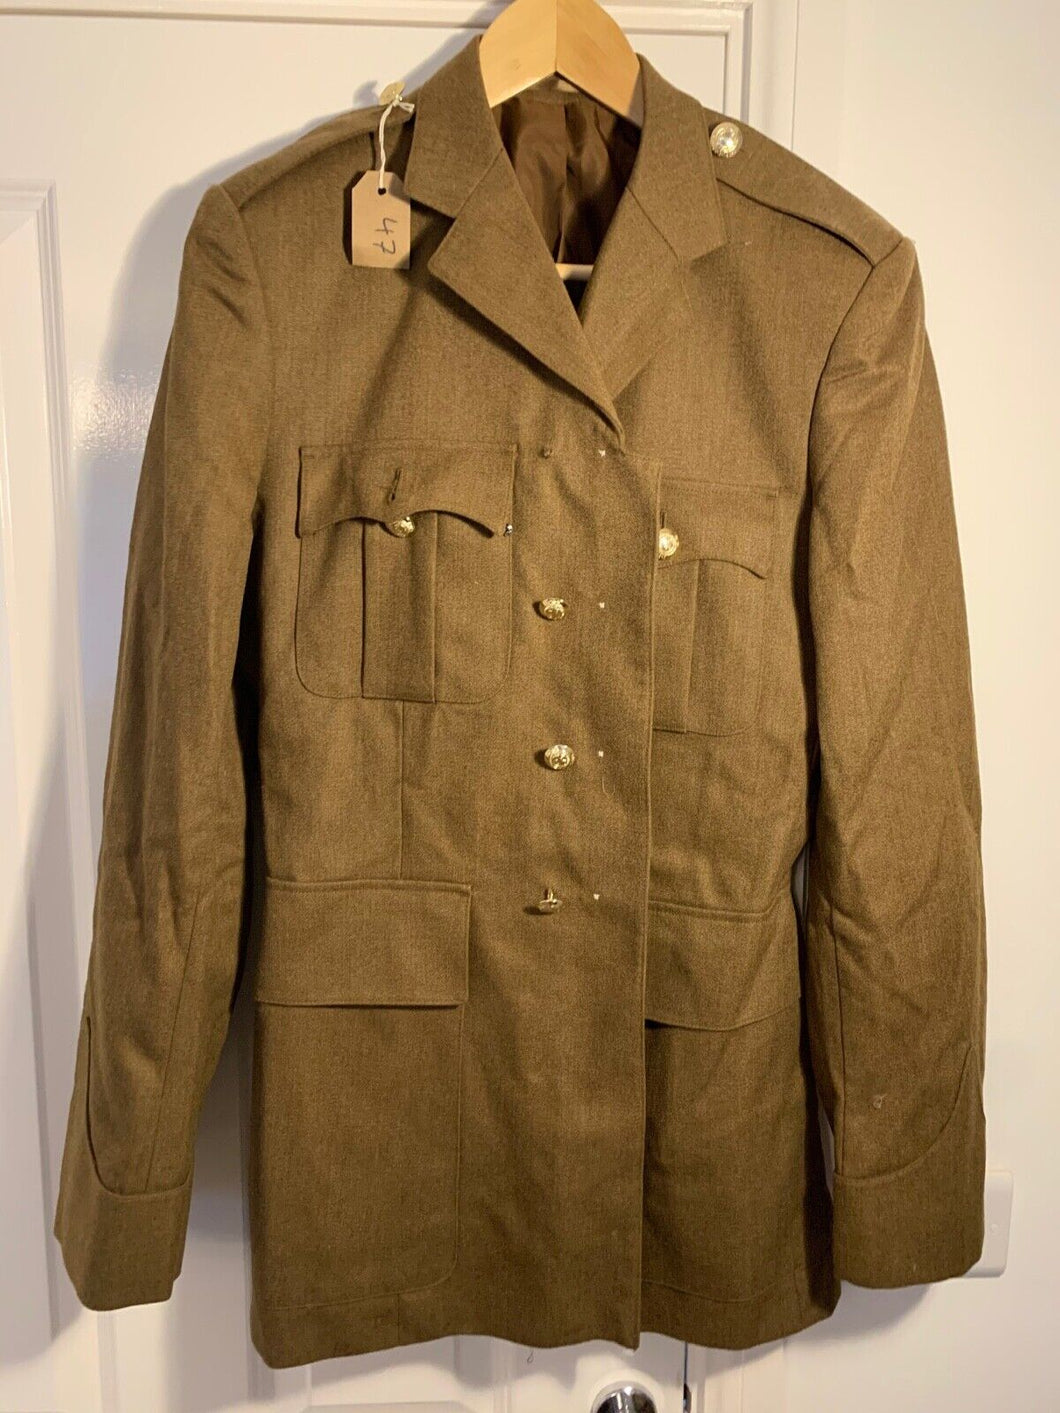 British Army No 2 Dress Uniform Jacket / Tunic Badged - Royal Engineers - #47